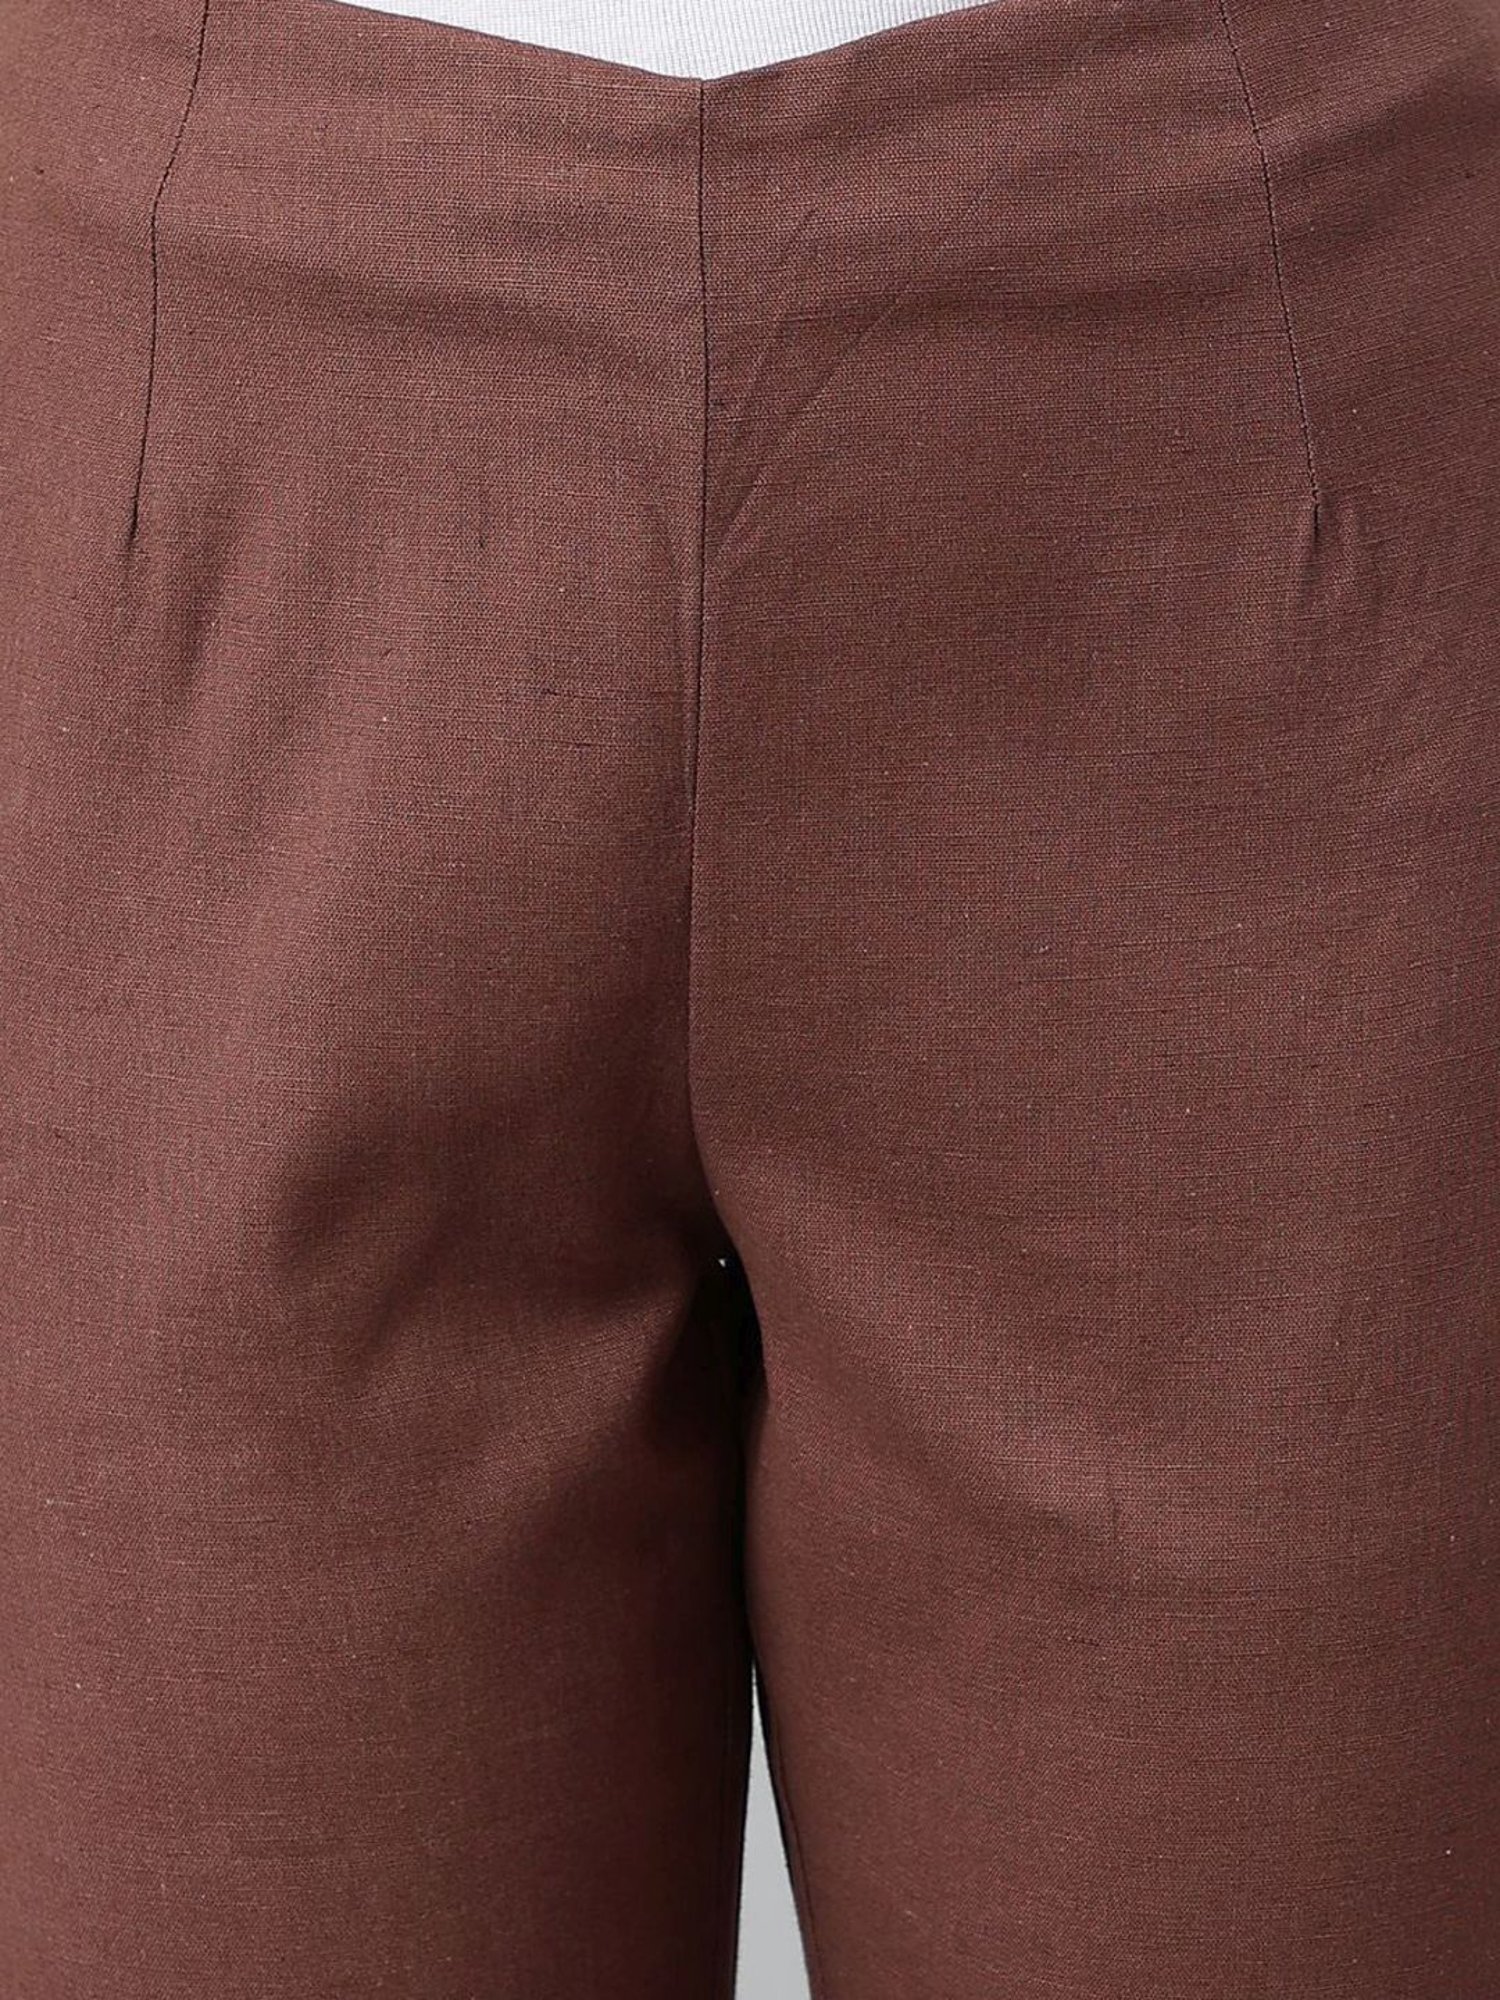 Wool straight pants Brunello Cucinelli Brown size 44 IT in Wool - 38894164